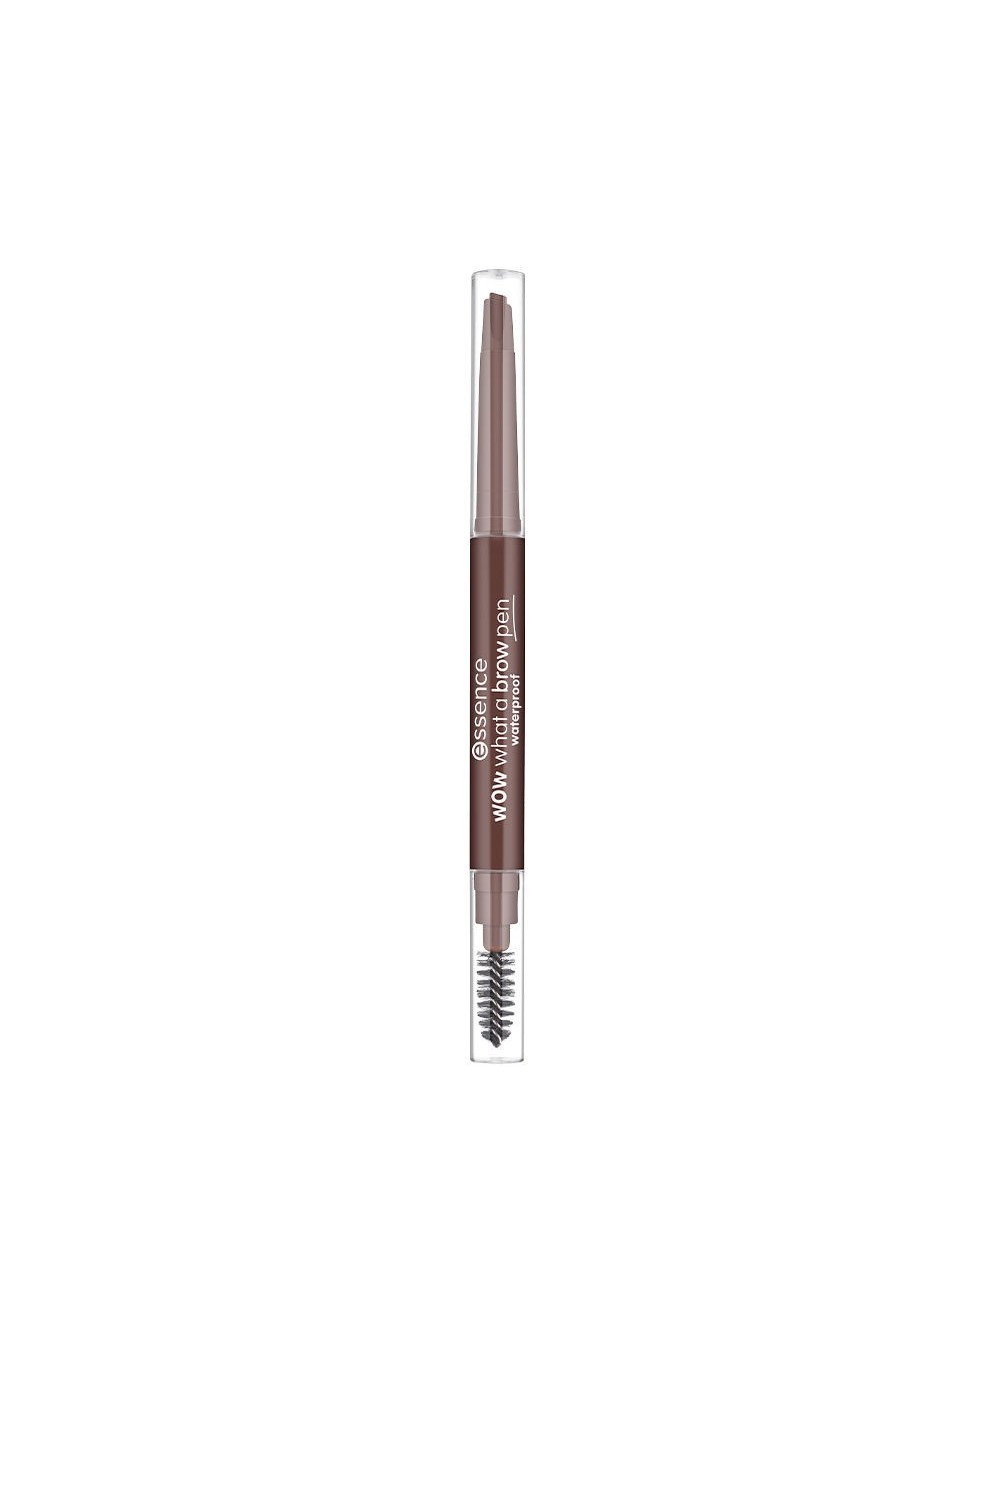 Essence Cosmetics Wow What A Brow Pen Lápiz De Cejas Waterproof 02-Brown 0,2g